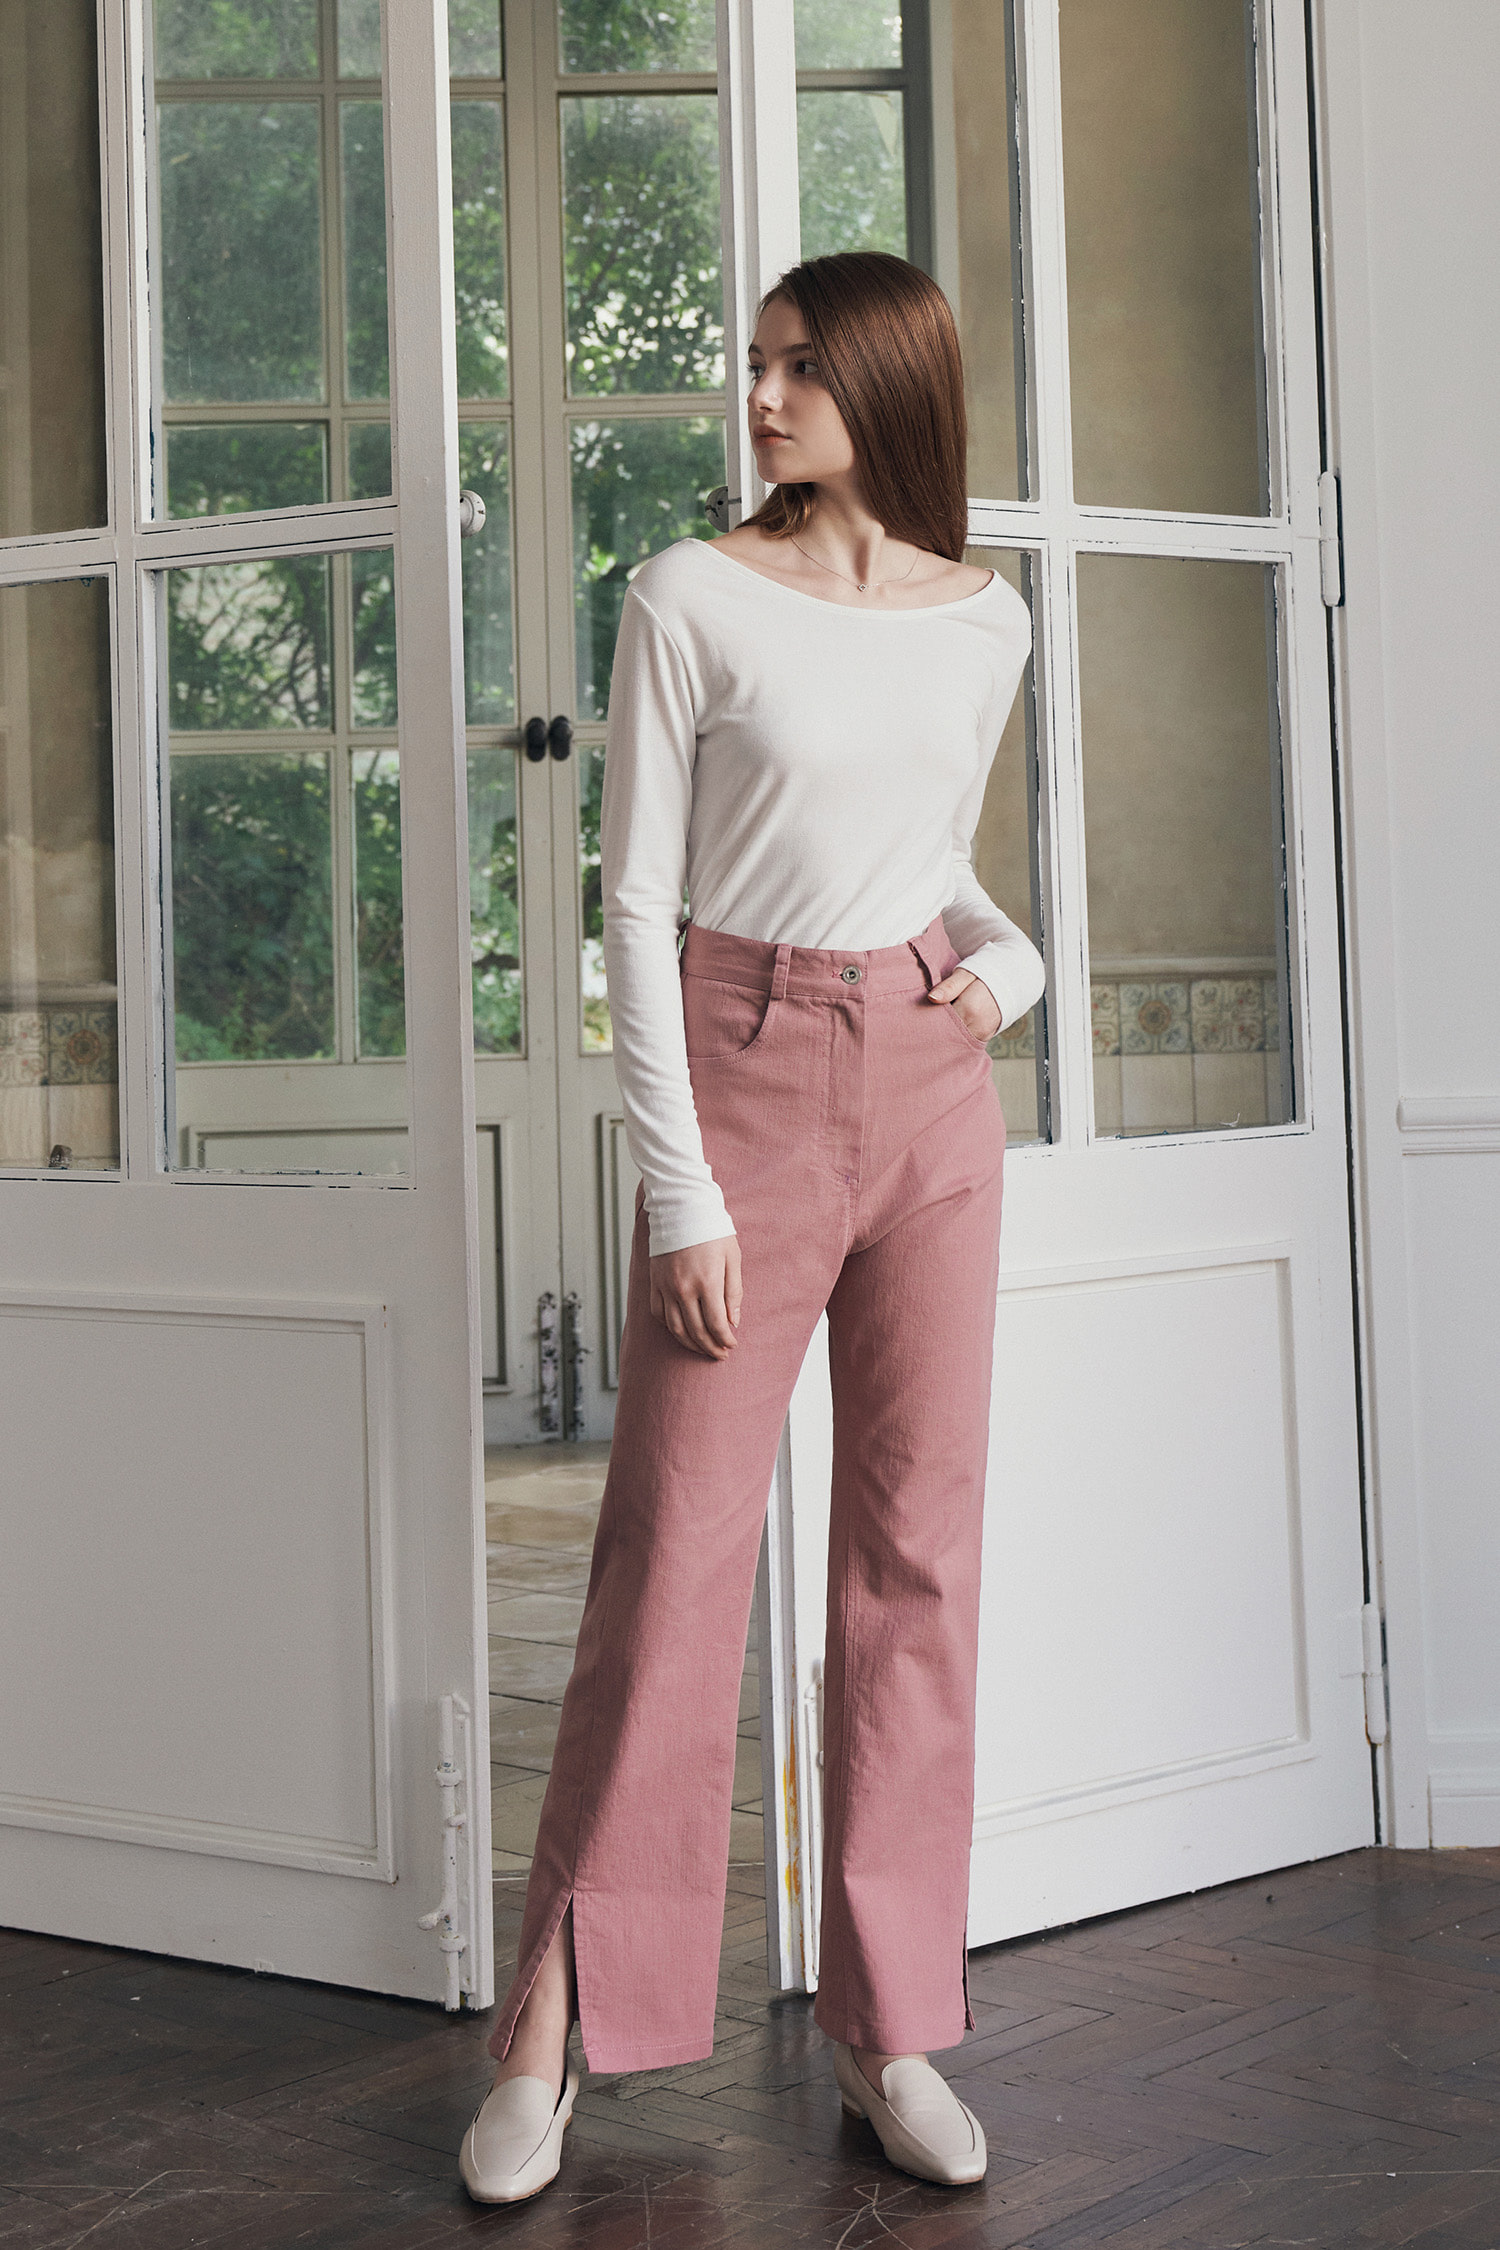 Flat wide slit cotton pants - pink